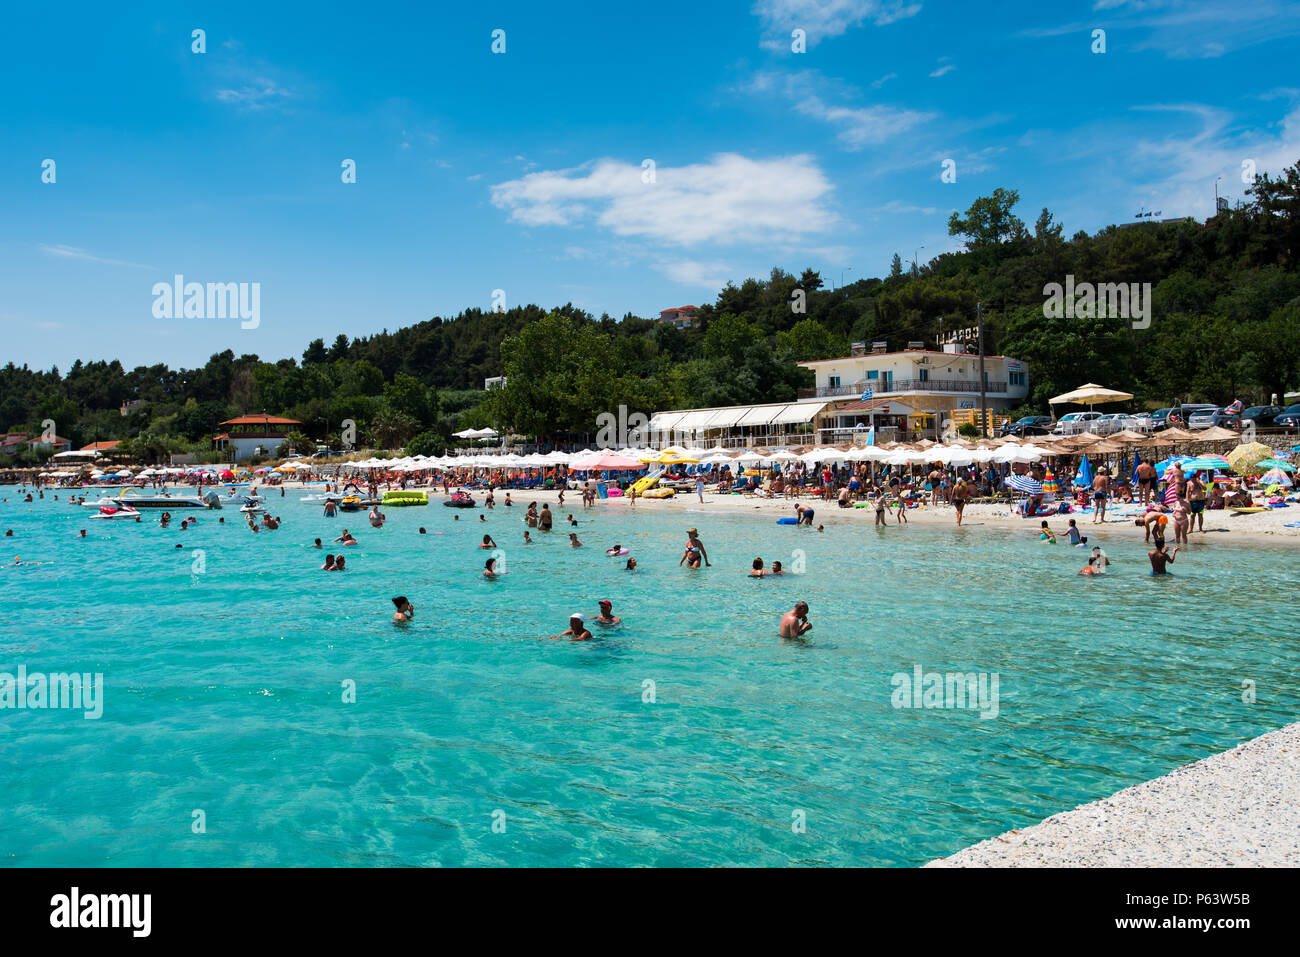 Chaniotis, Greece - June 23, 2018: Popullar Chaniotis city beach in Kassandra, Chalkidiki with many tourists enjoying the sunny day Stock Photo